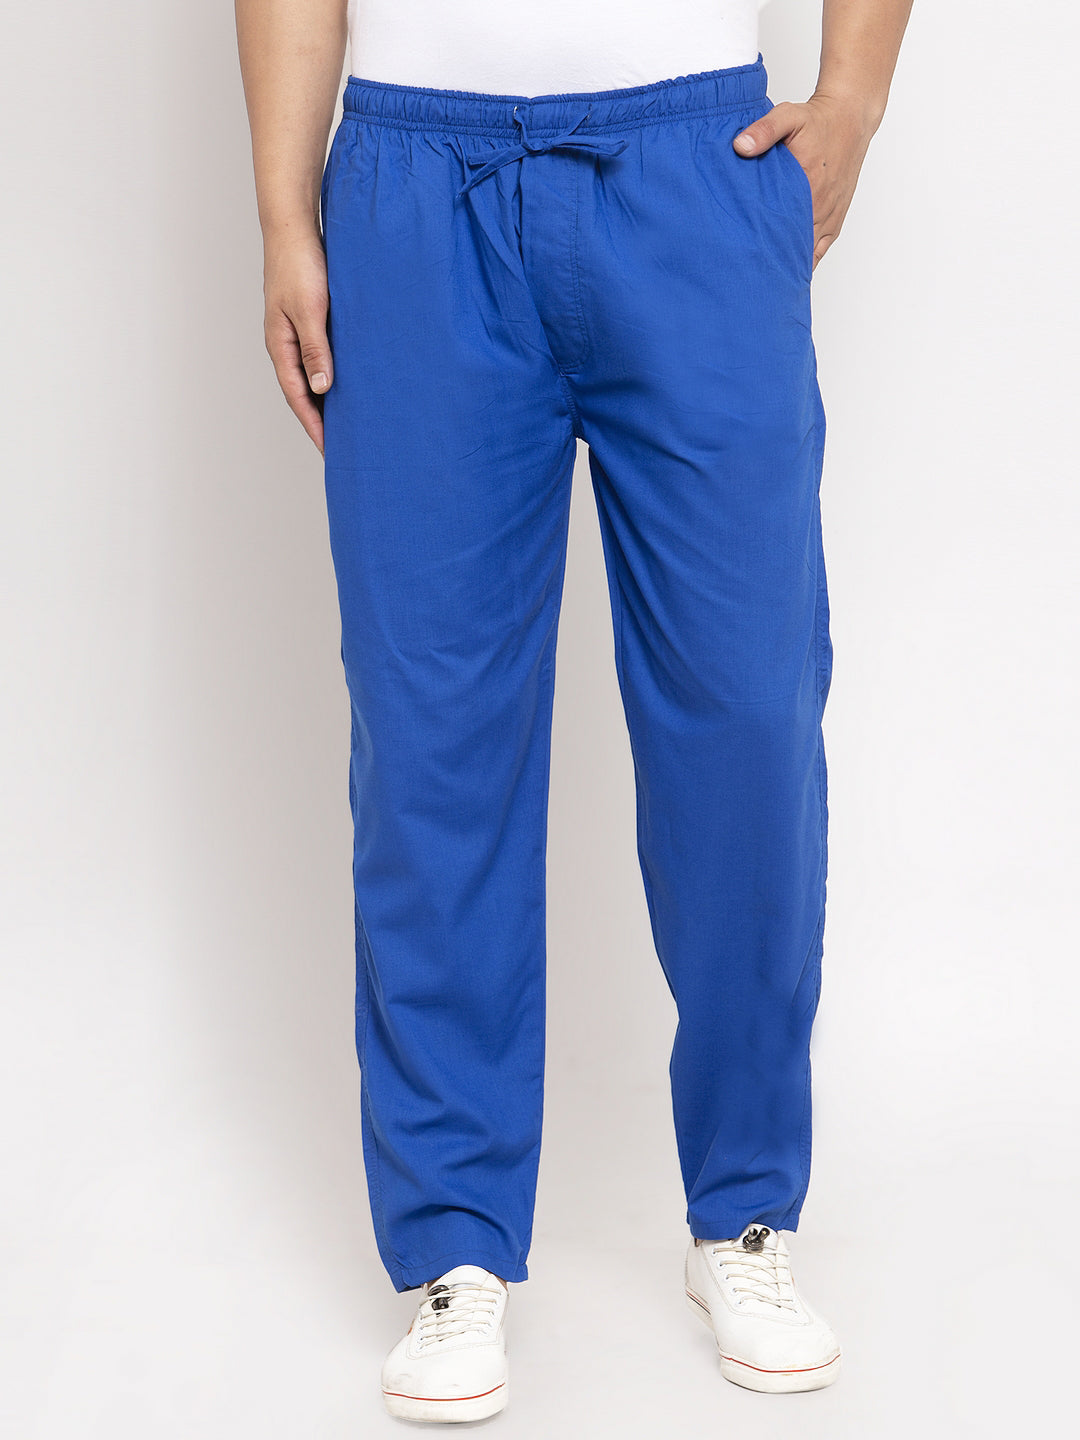 Men's Blue Solid Cotton Track Pants ( JOG 011Royal-Blue ) - Jainish